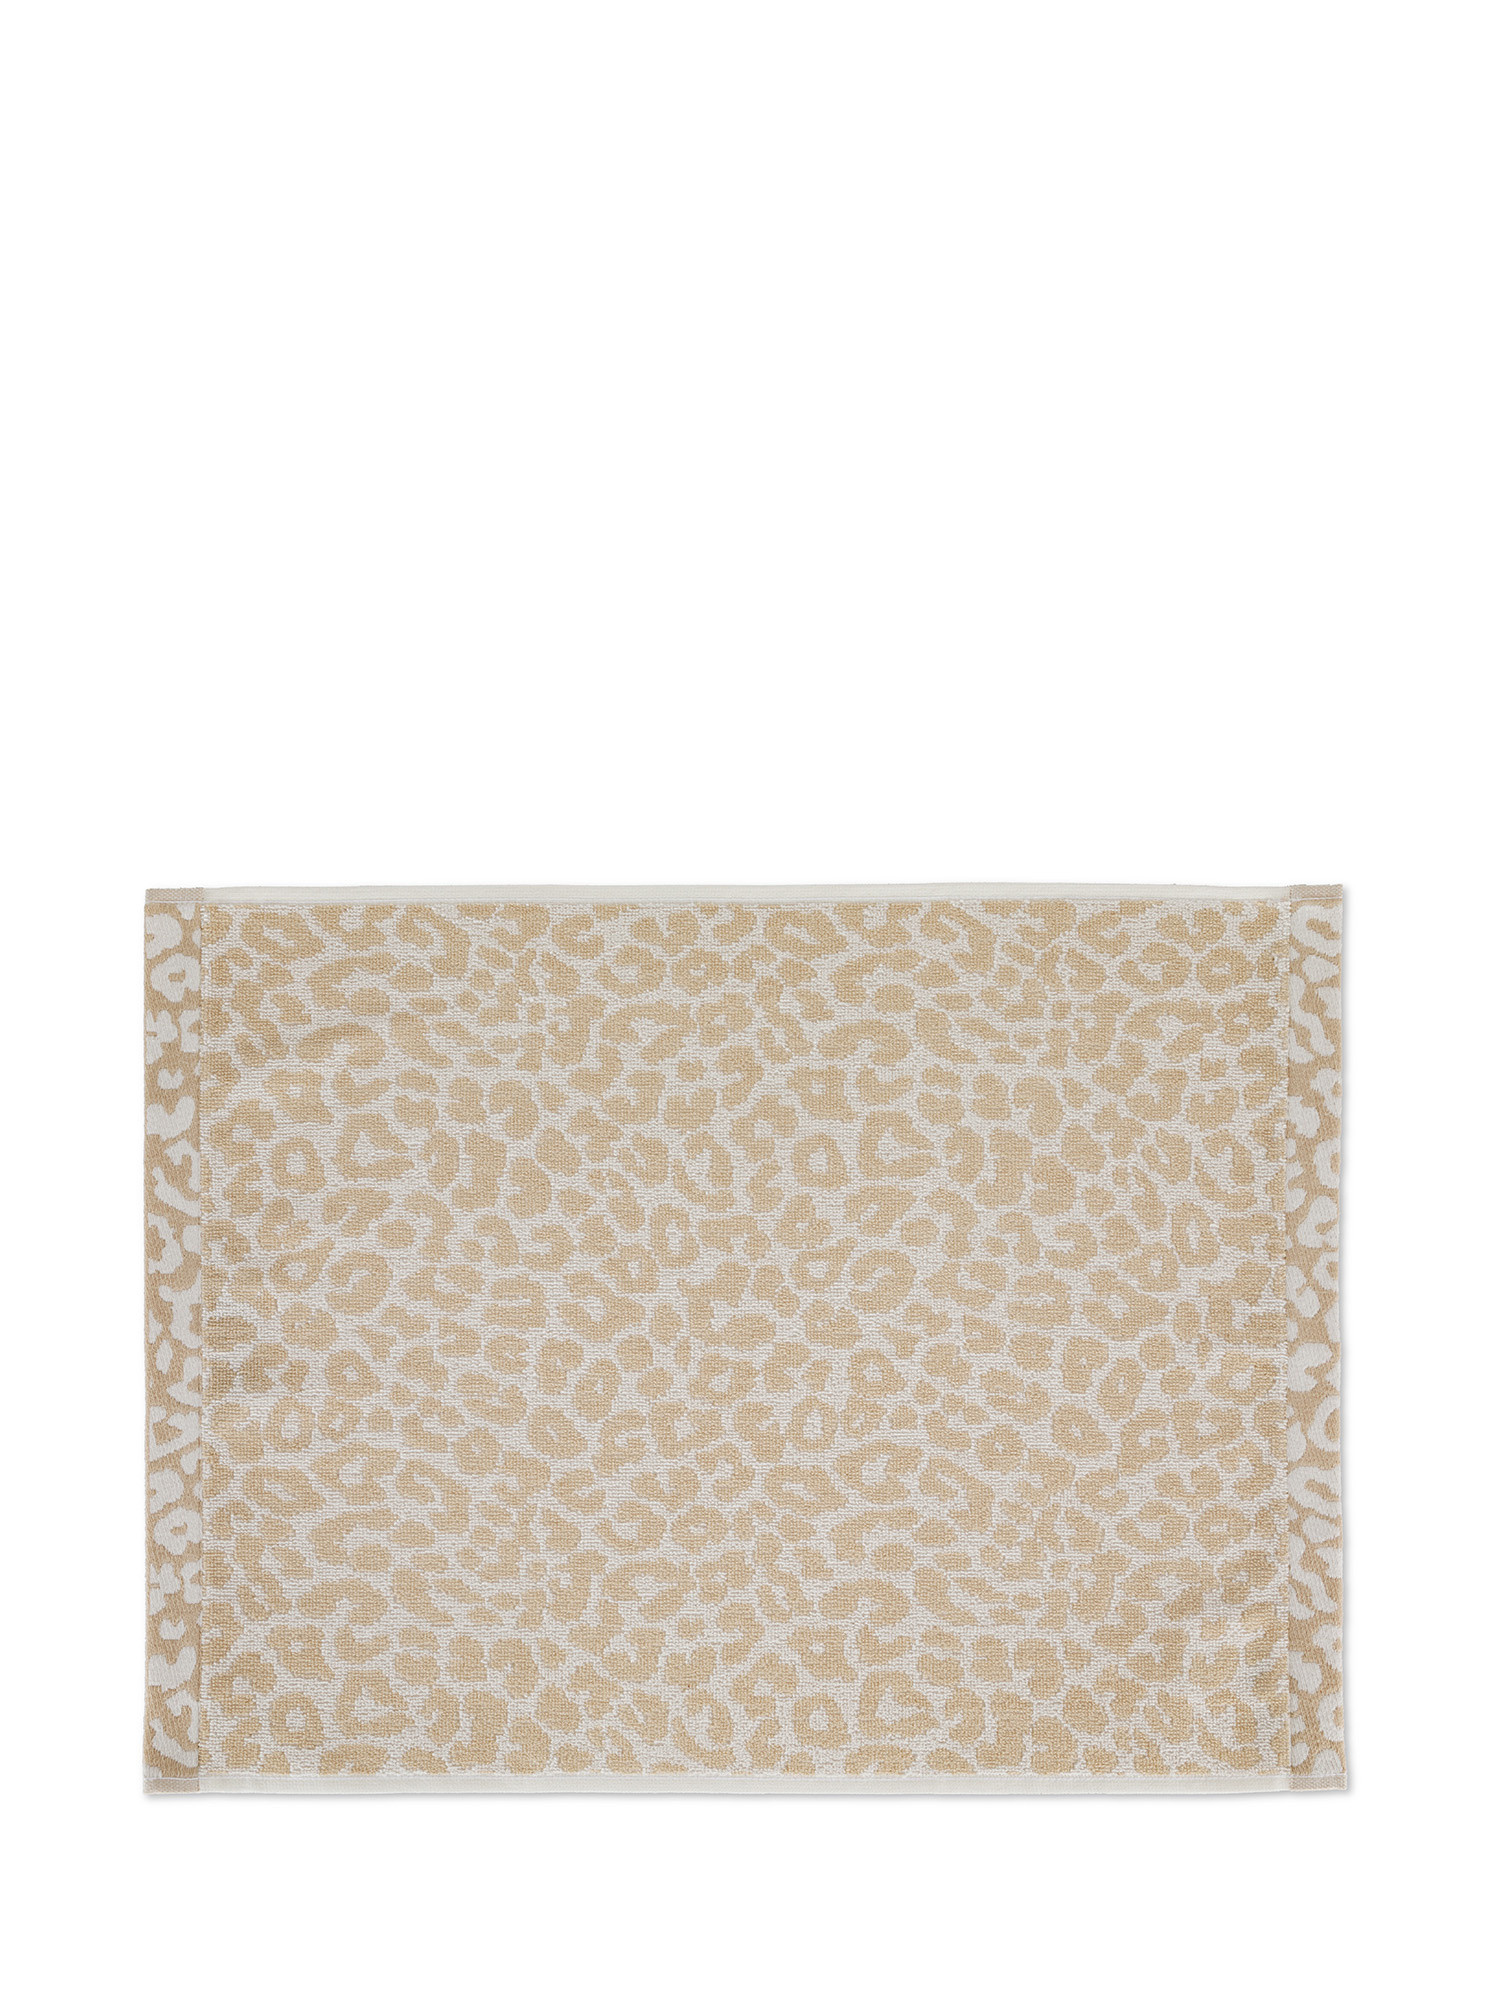 Animal print jacquard cotton terry towel, Cream, large image number 1